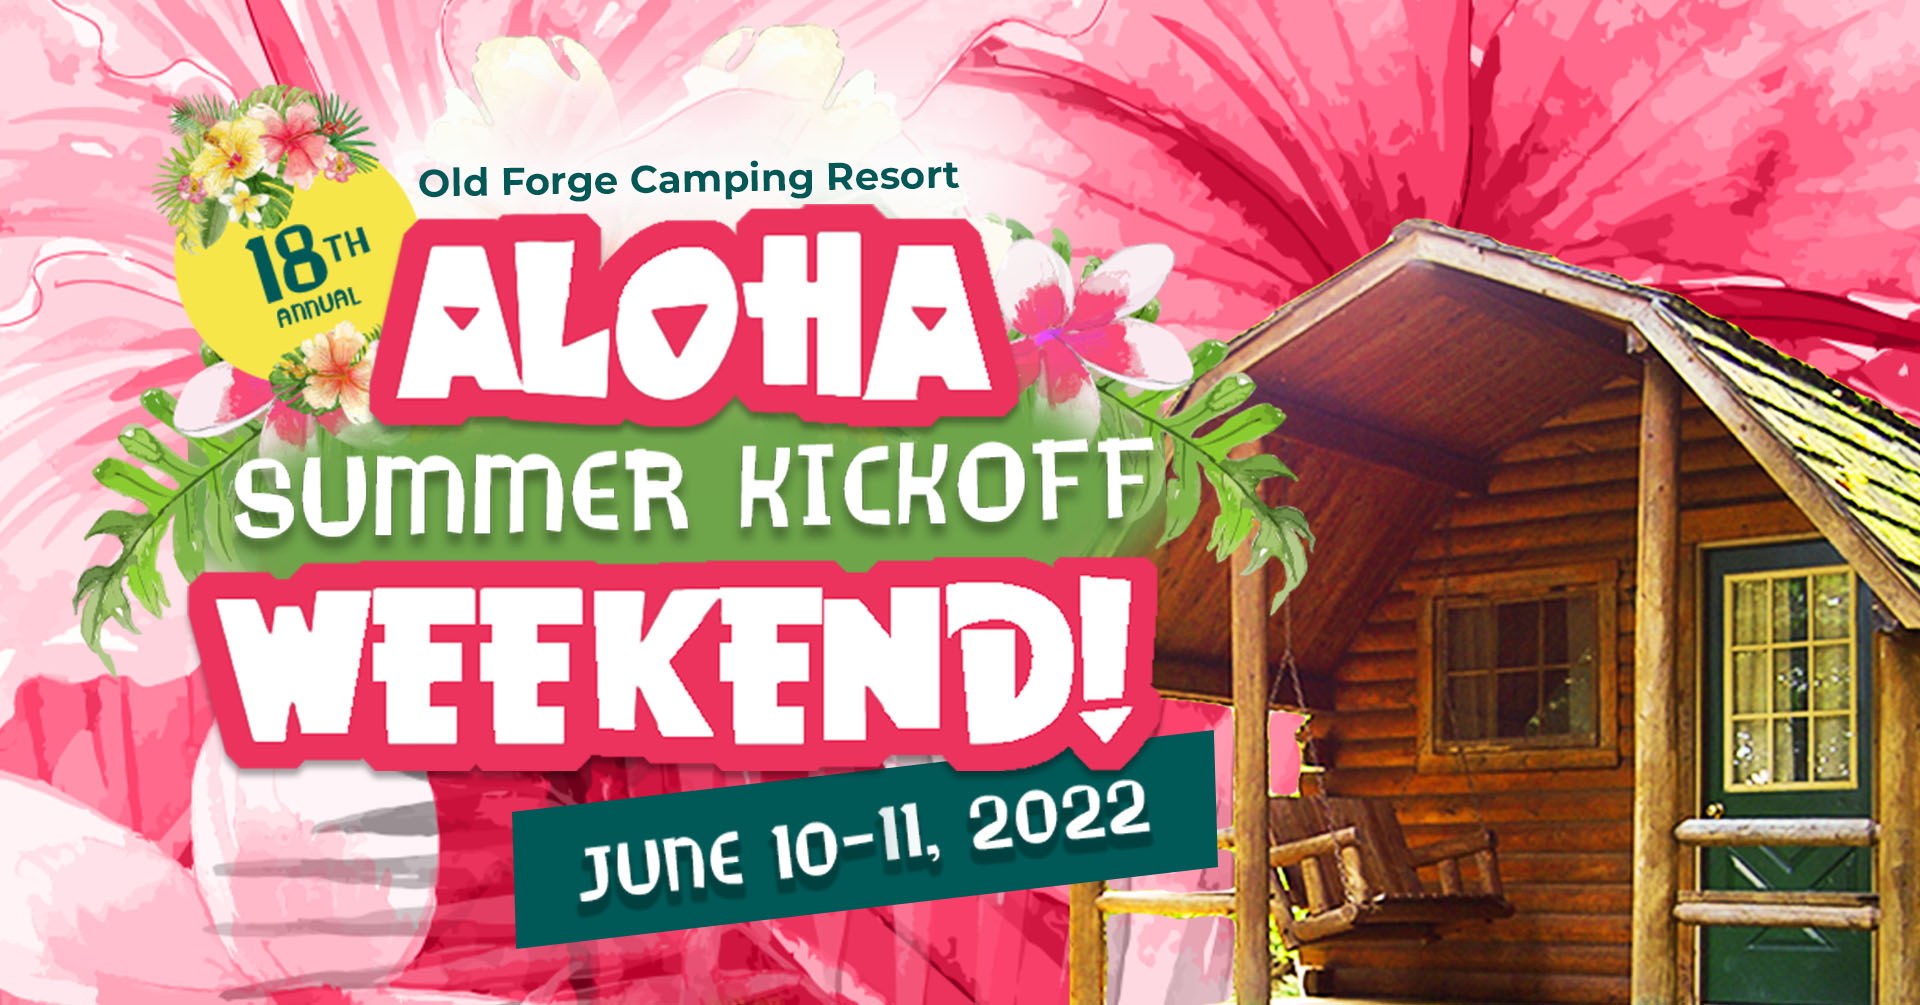 18th Annual Aloha Summer Kick-Off at Old Forge Camping Resort